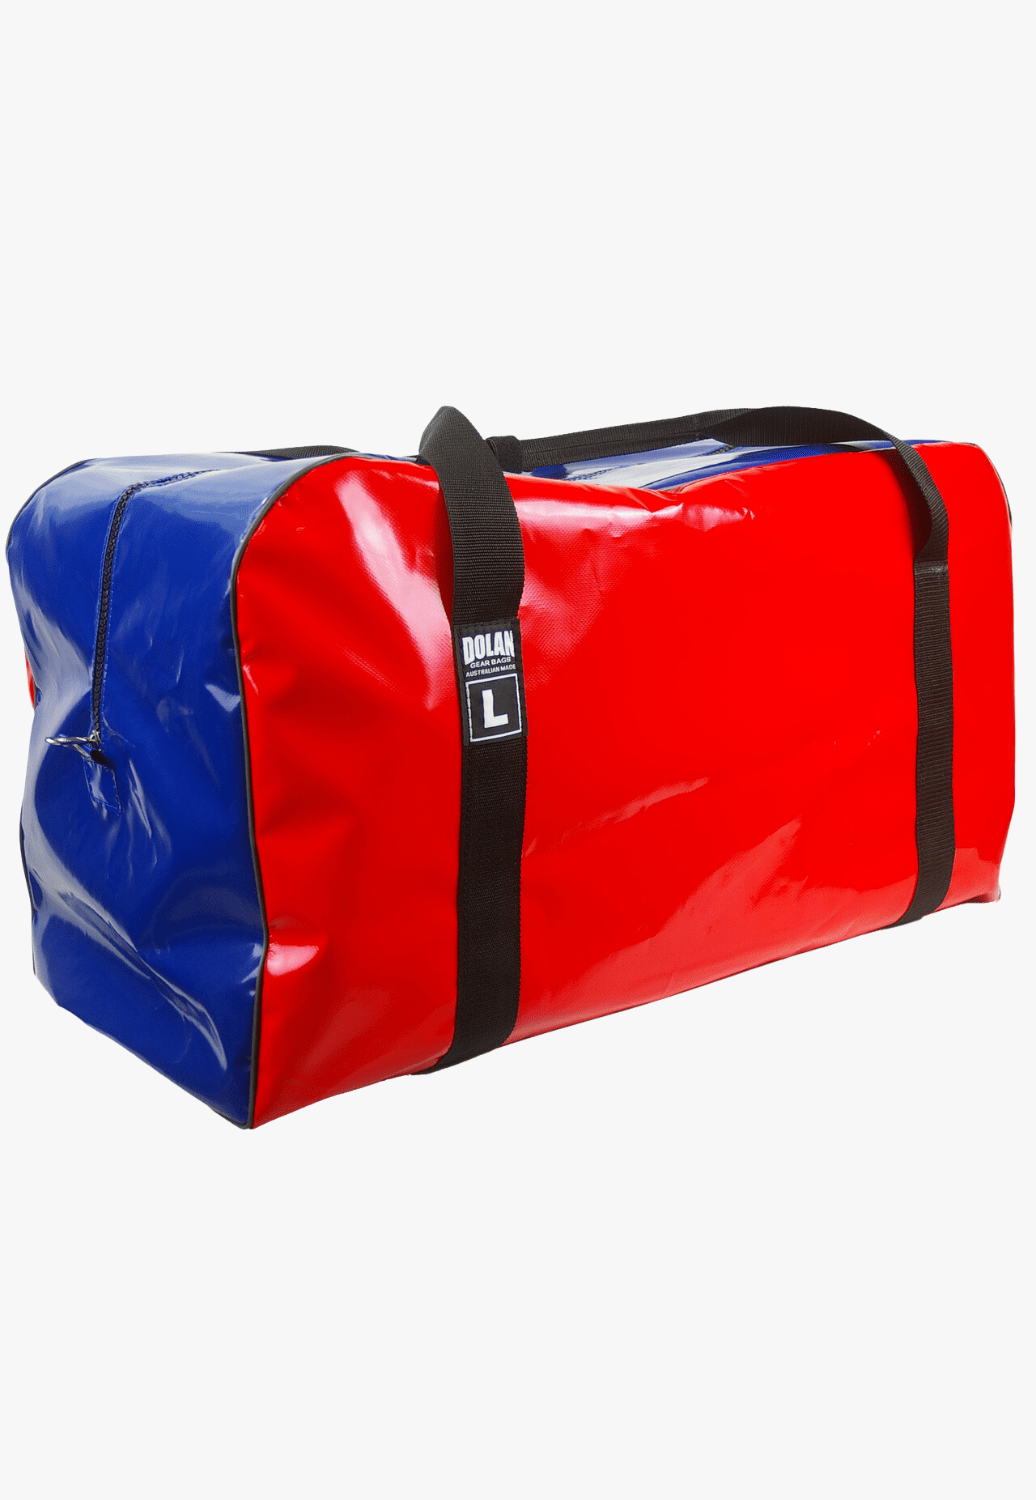 Dolan TRAVEL - Travel Bags XL / Red/Blue Dolan Extra Large Gear Bag